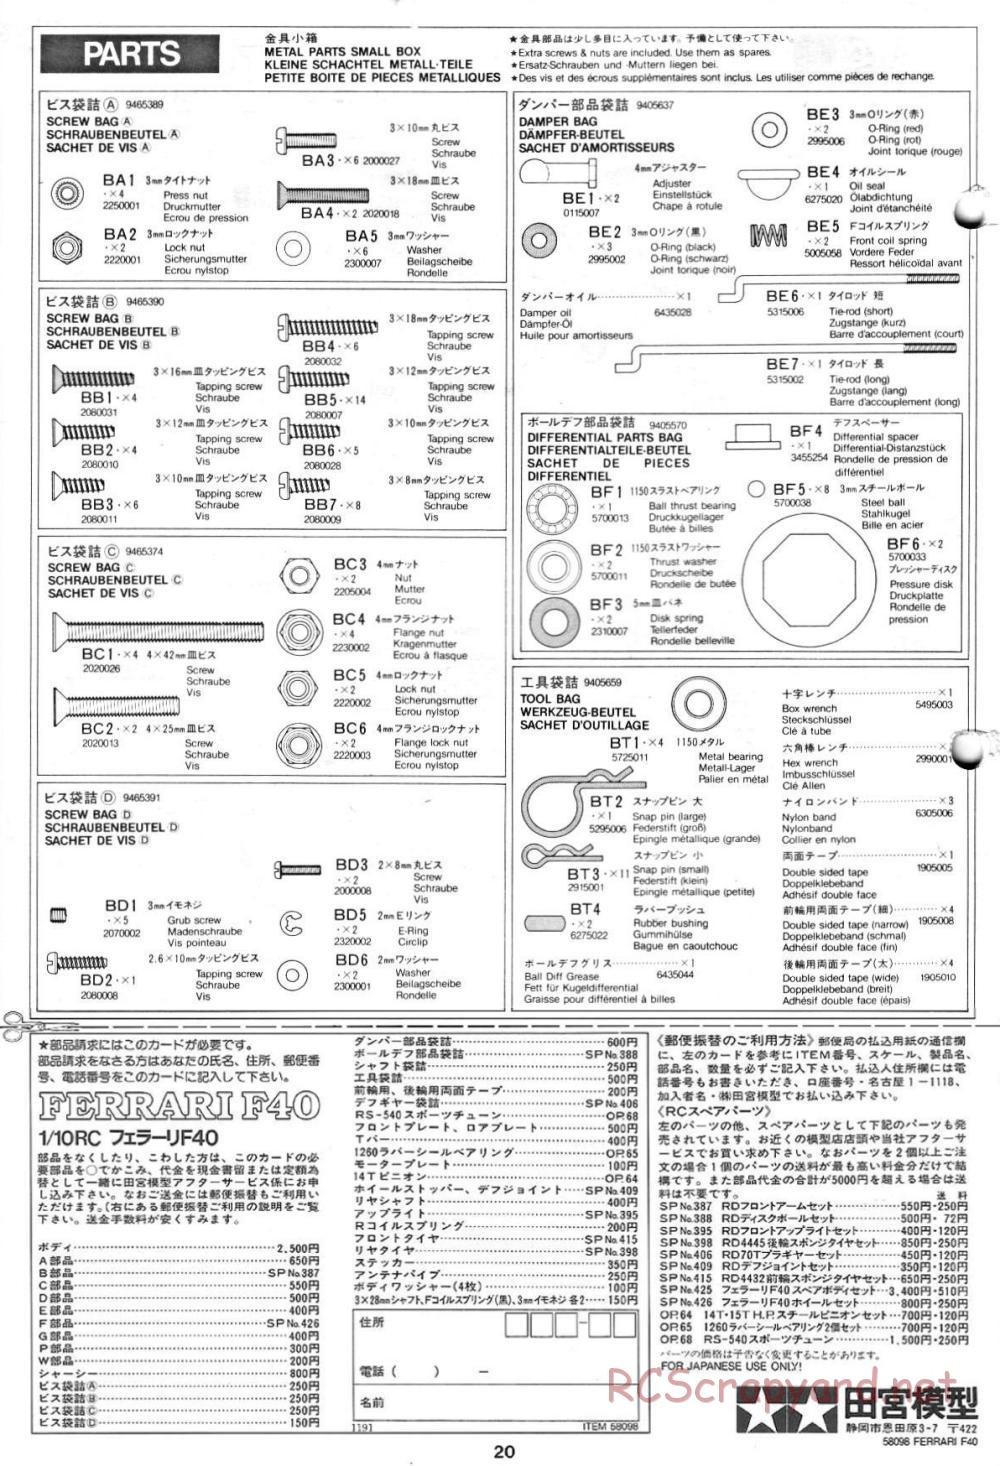 Tamiya - Ferrari F40 - 58098 - Manual - Page 20